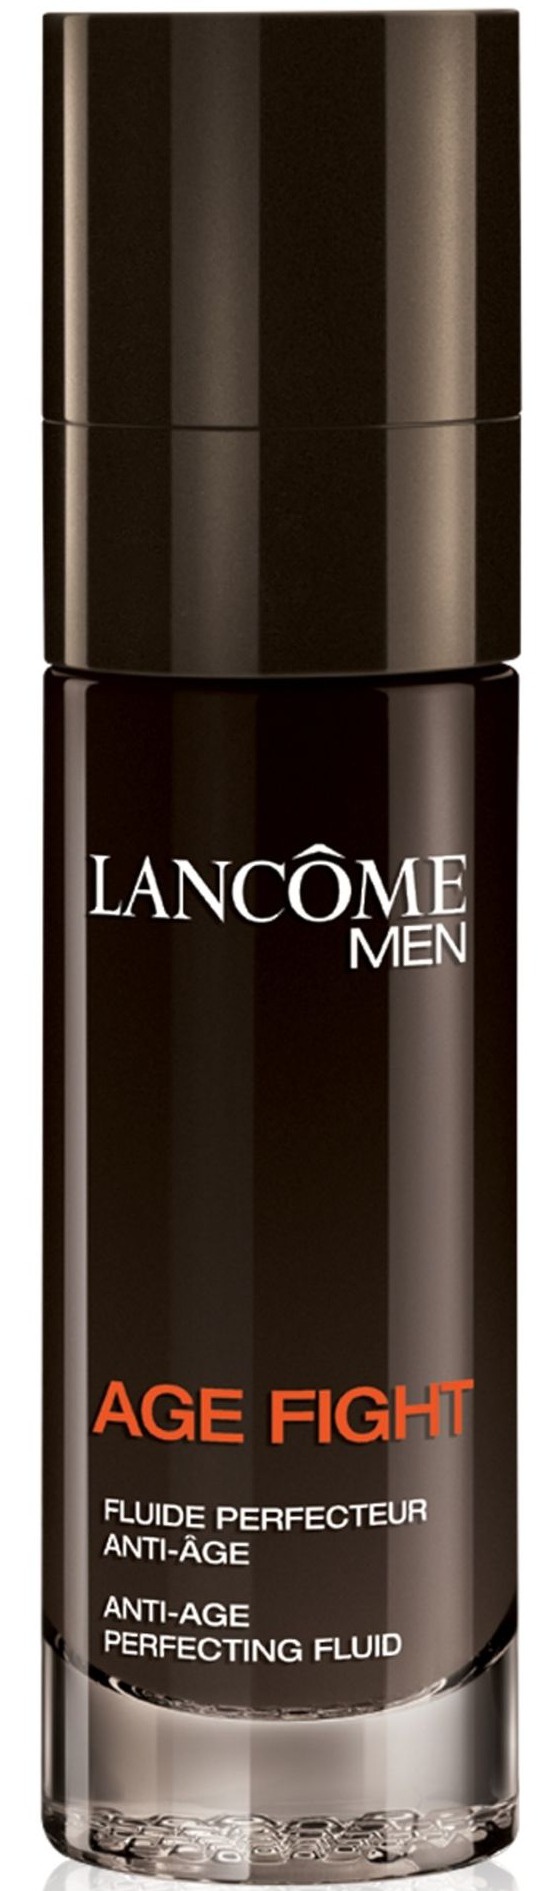 Lancôme Men Age Fight Gel Anti-Age Perfecting Fluid